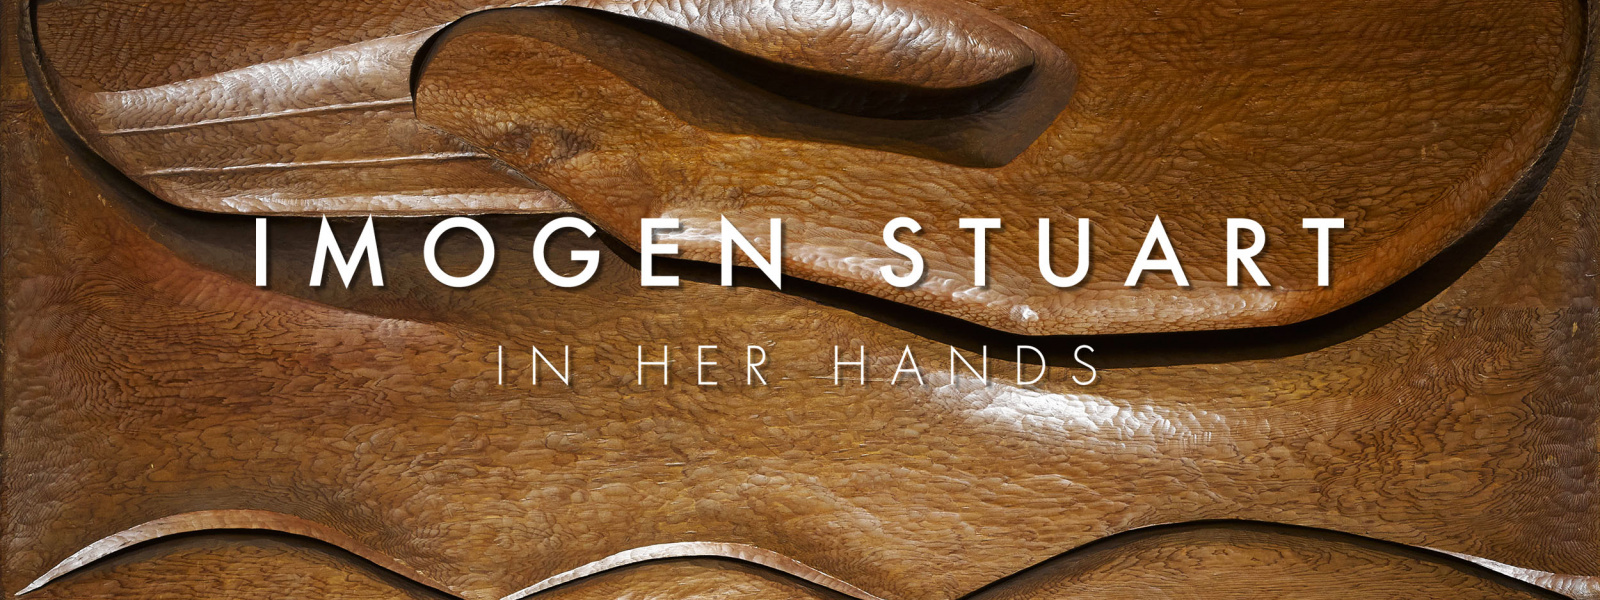 Imogen Stuart In Her Hands Exhibition - The Psalm, 1993